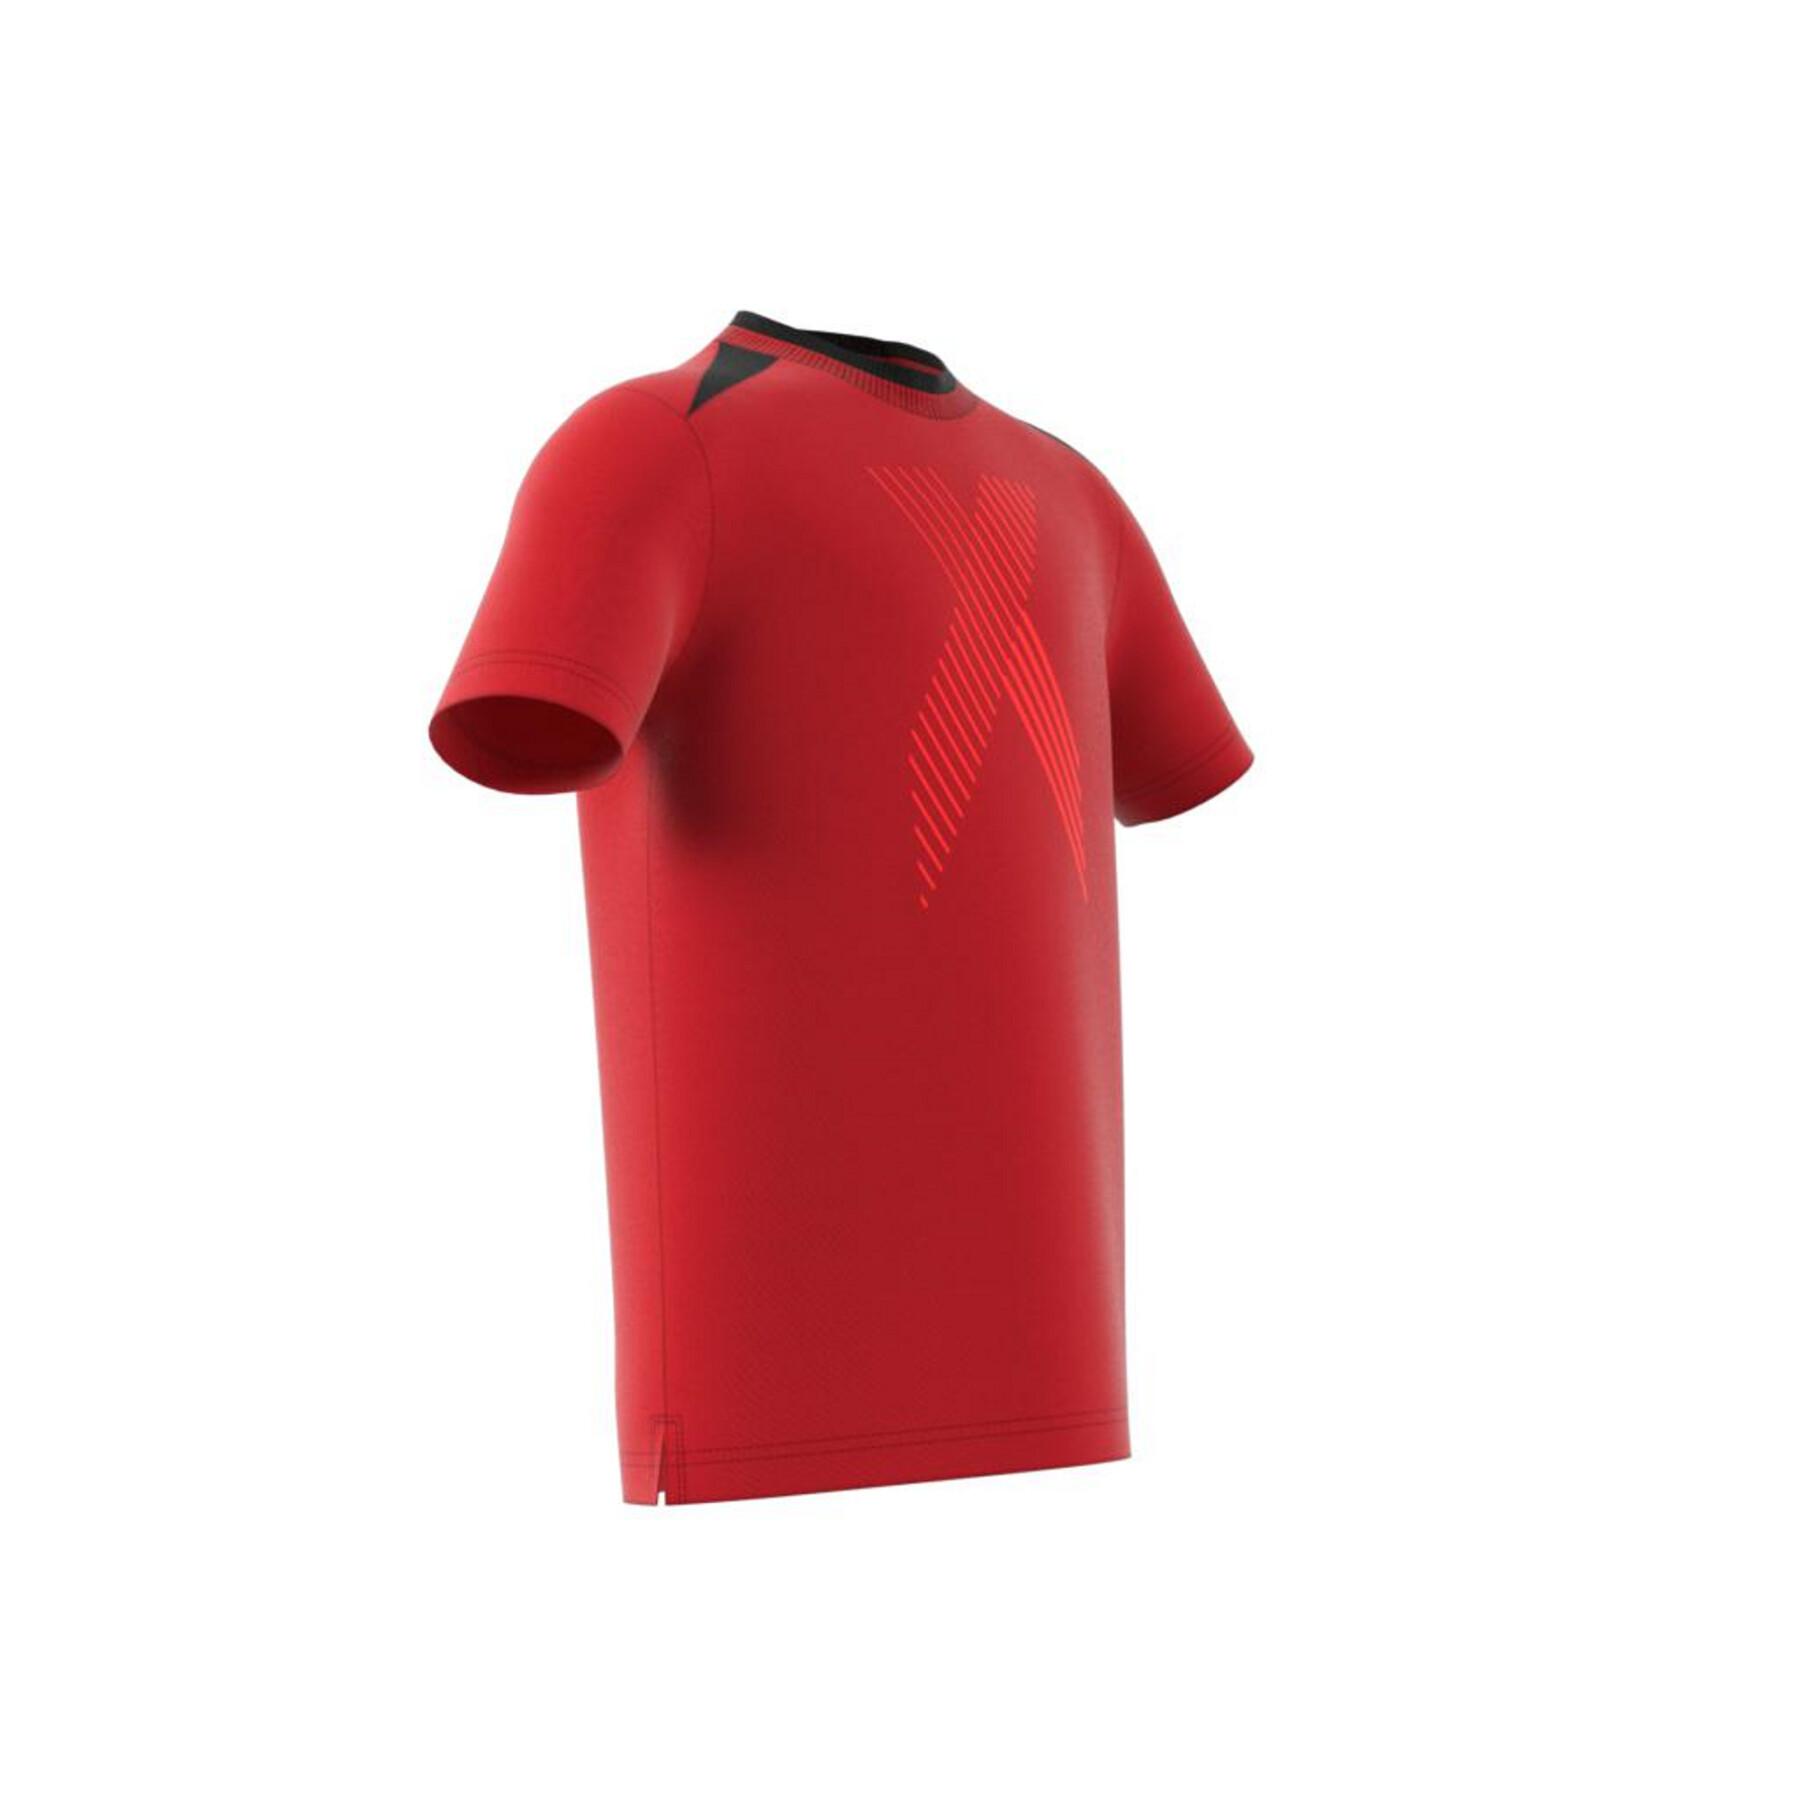 Child's T-shirt adidas AEROREADY X Football-Inspired